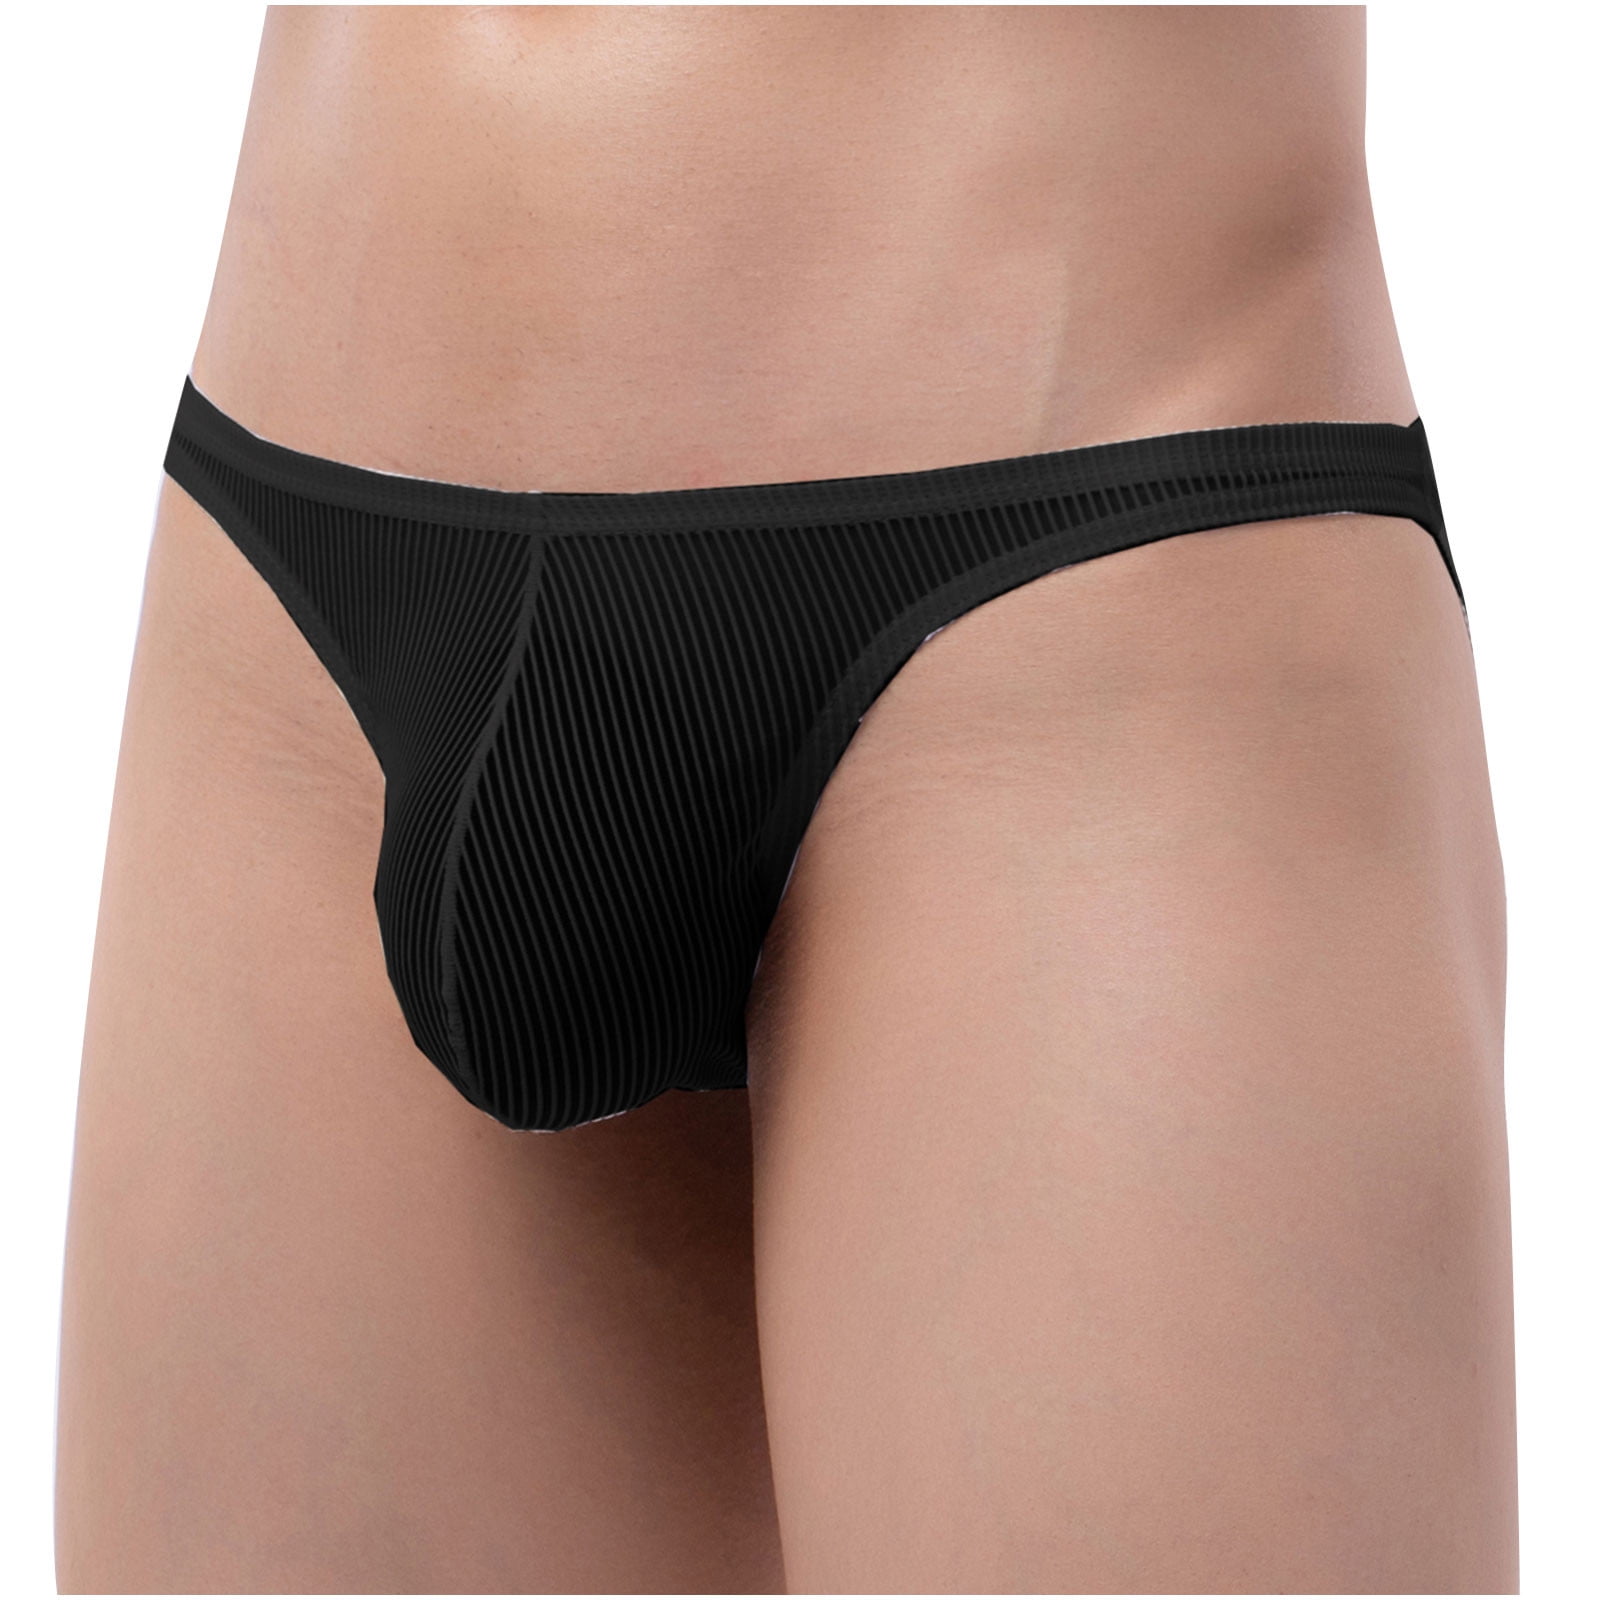 CreoQIJI Primark Men's Underwear Breathable Men's Sexy Low Rise